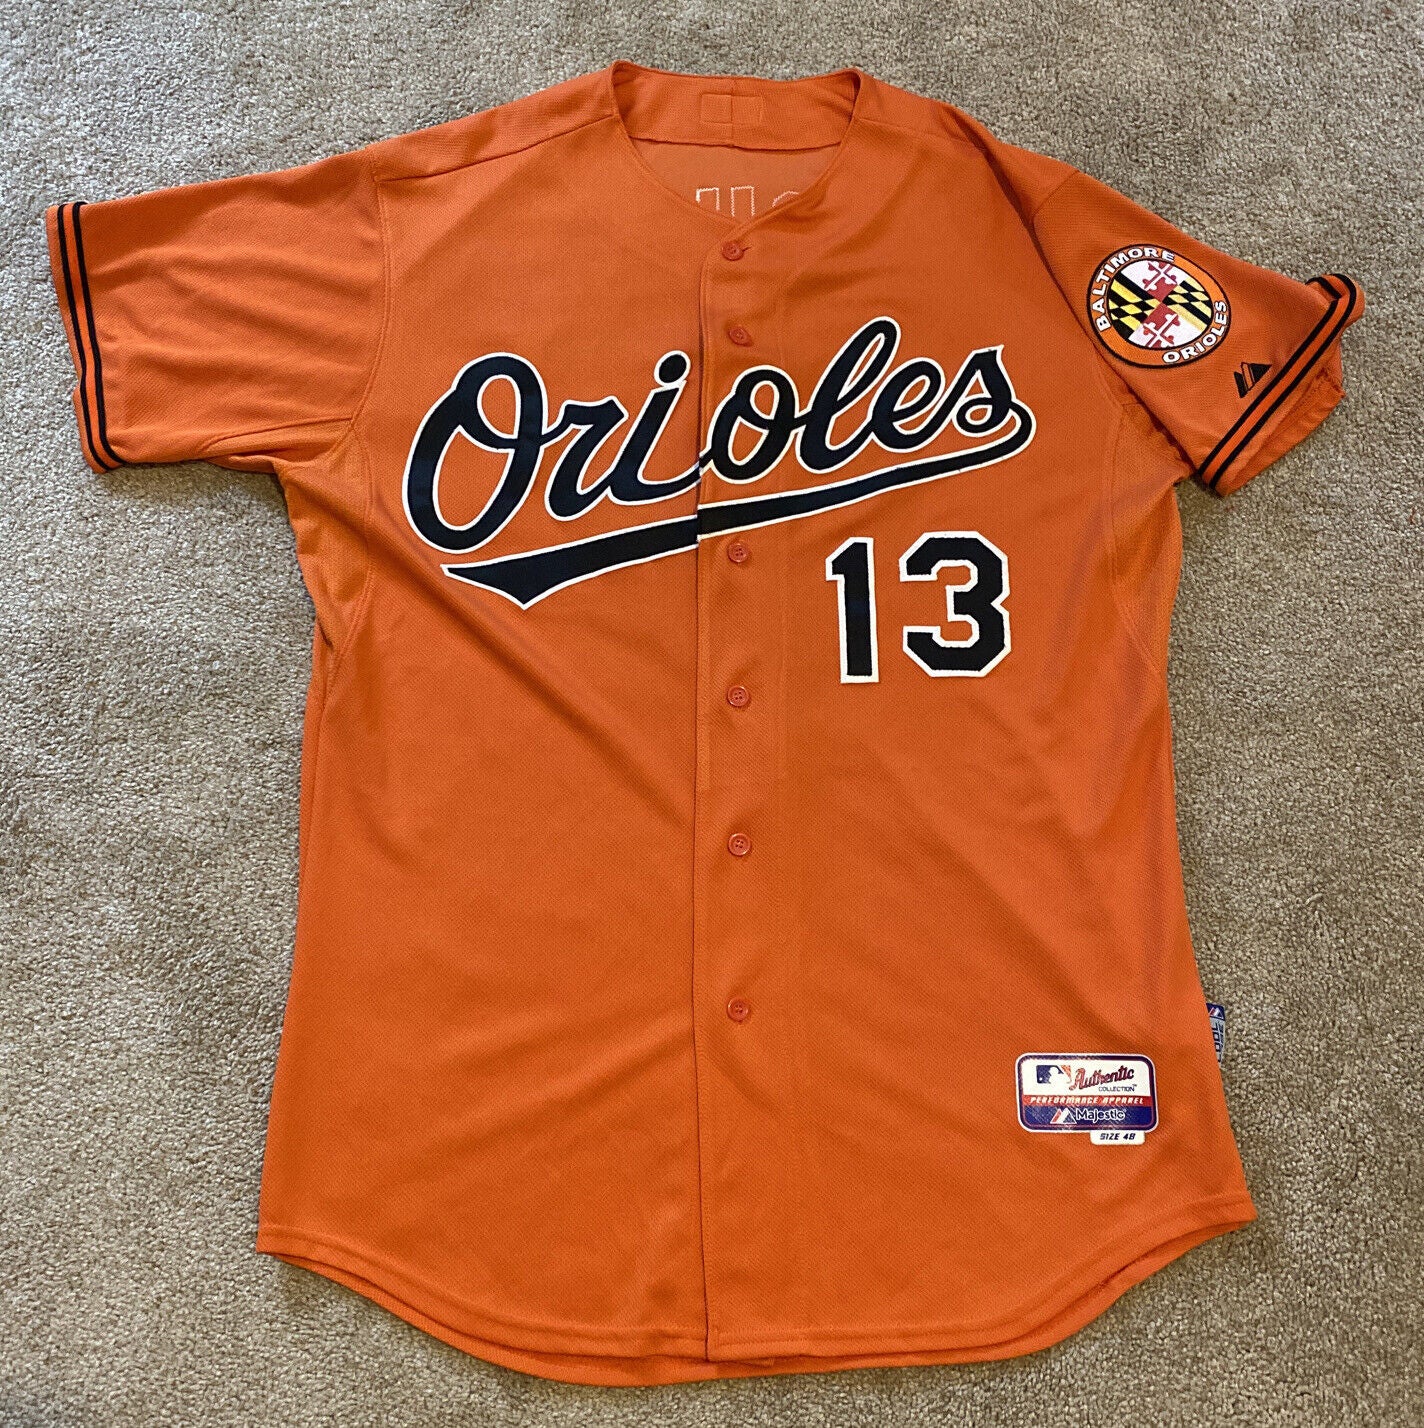 Authentic Baltimore Orioles Manny Machado COOL BASE Orange